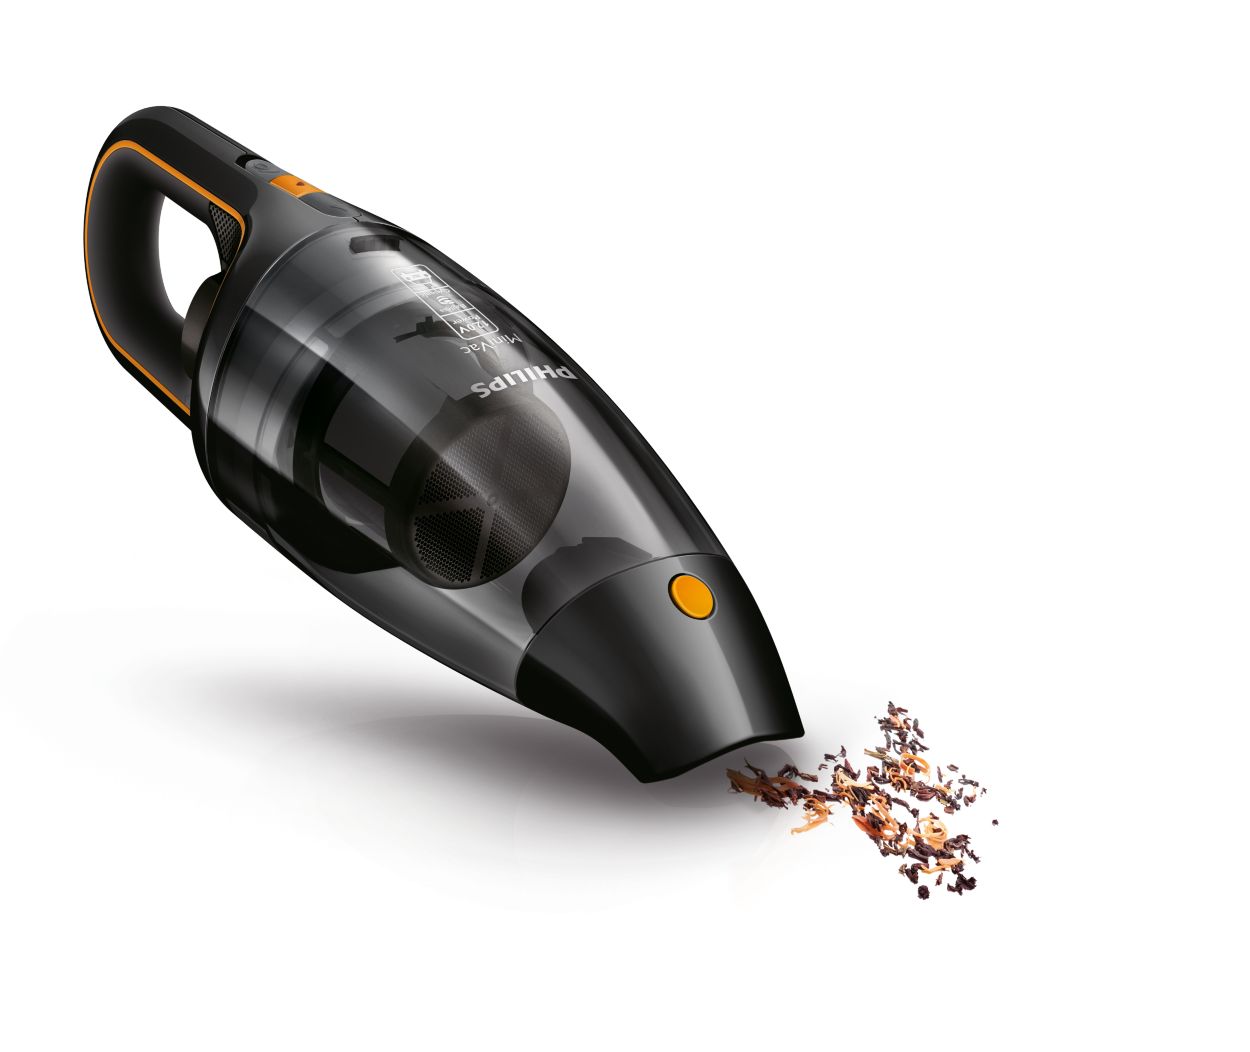 MiniVac Handheld vacuum cleaner FC6149/02 Philips 